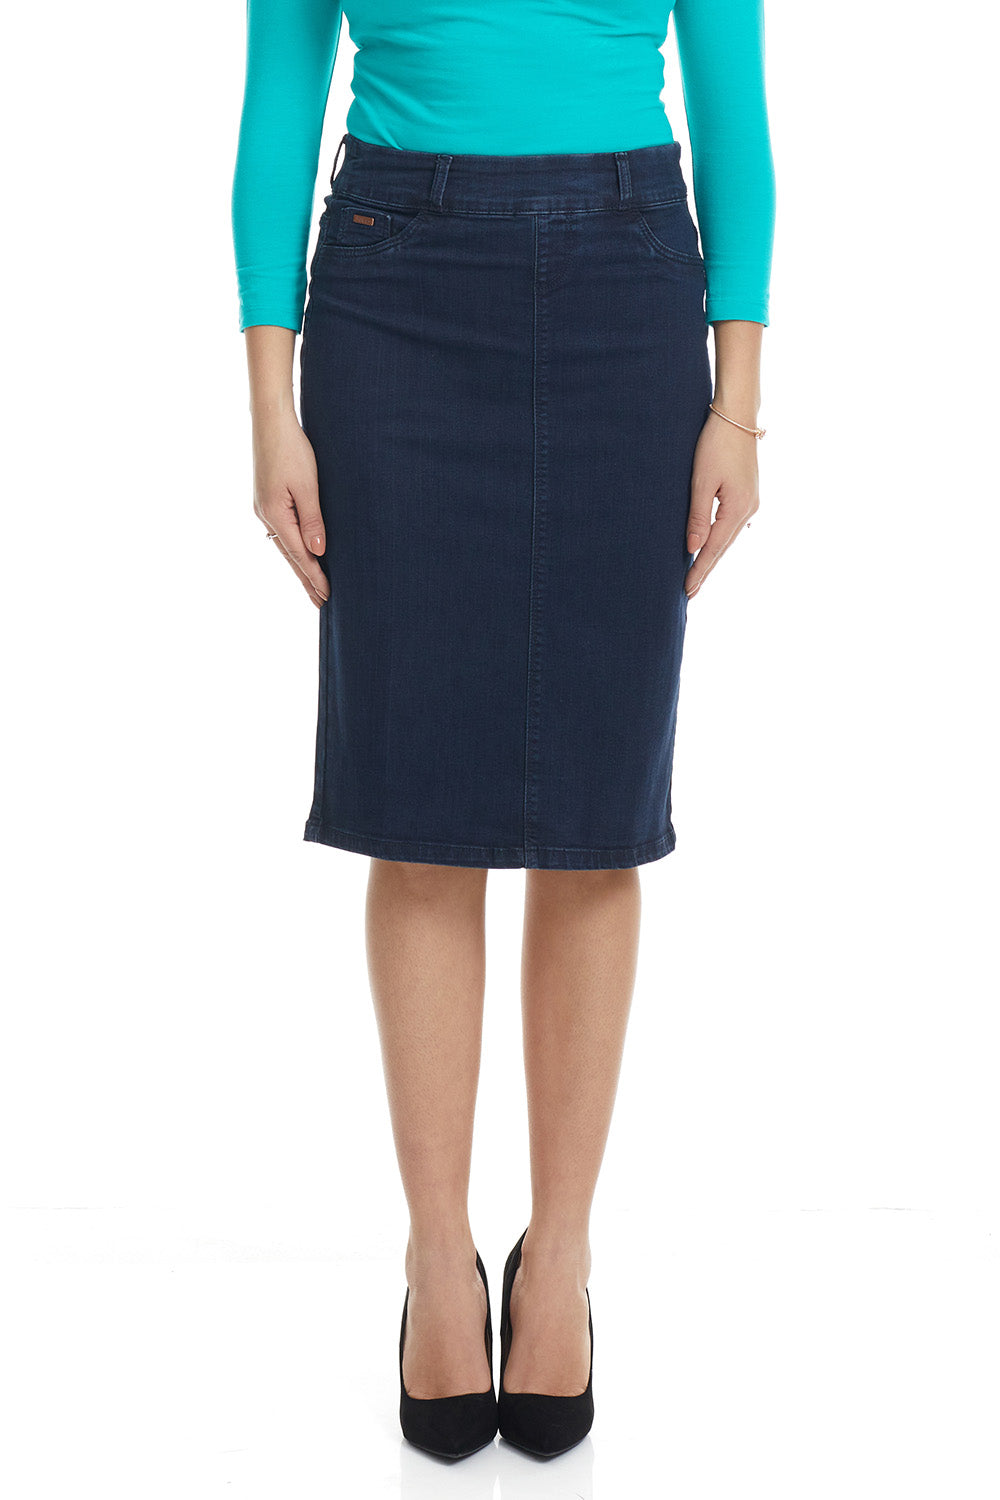 blue straight below the knee modest denim skirt for women